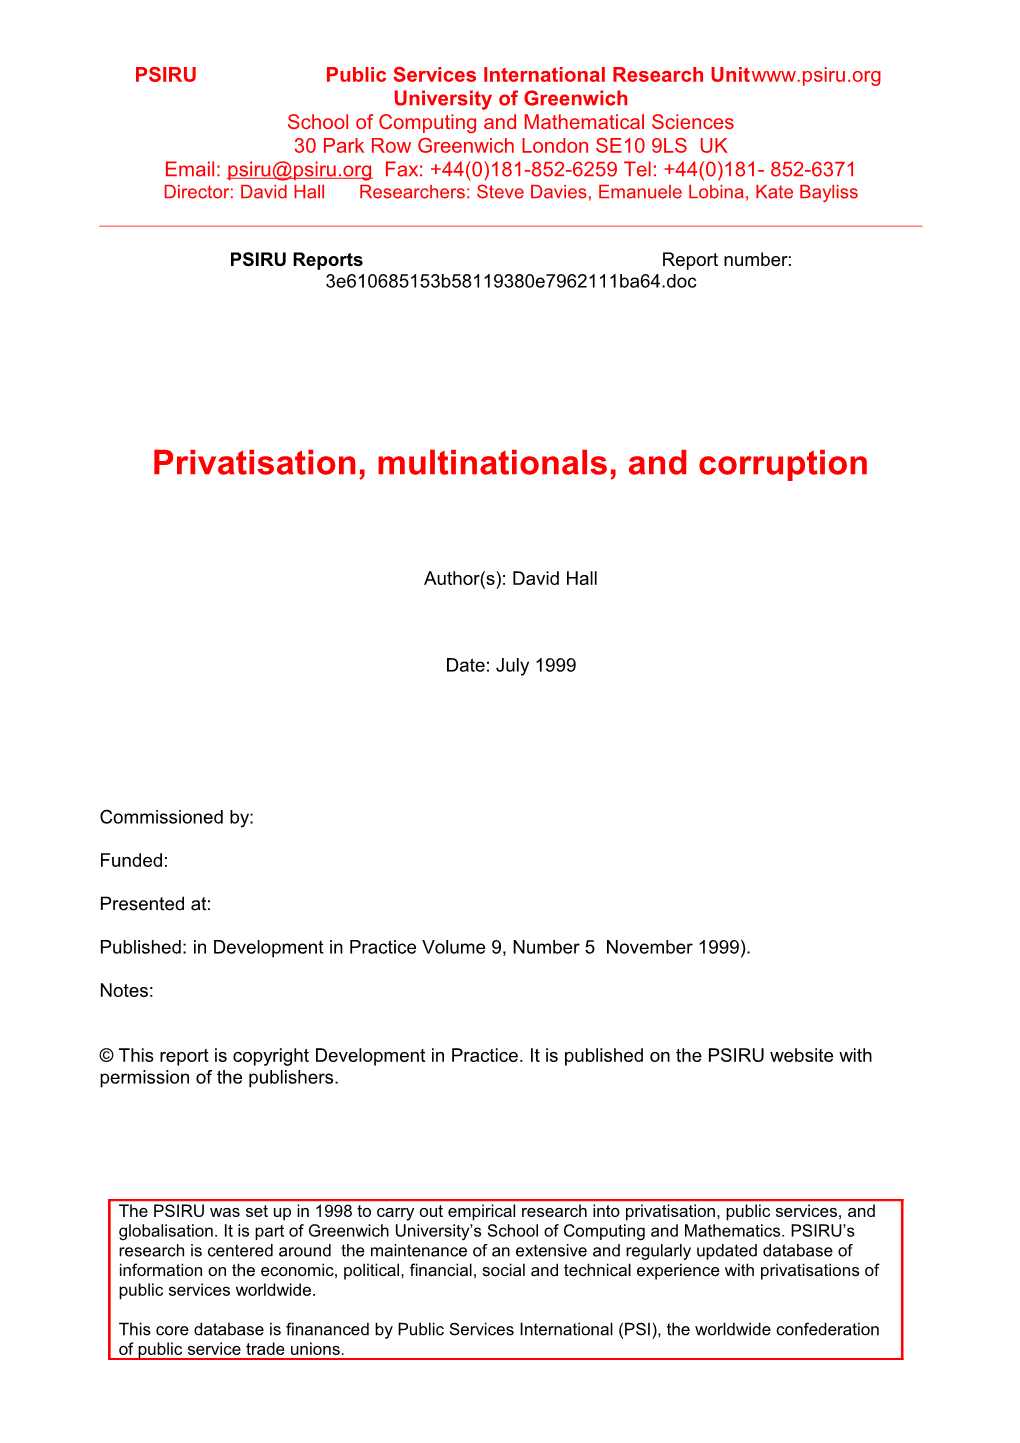 Privatisation, Multinationals, and Corruption